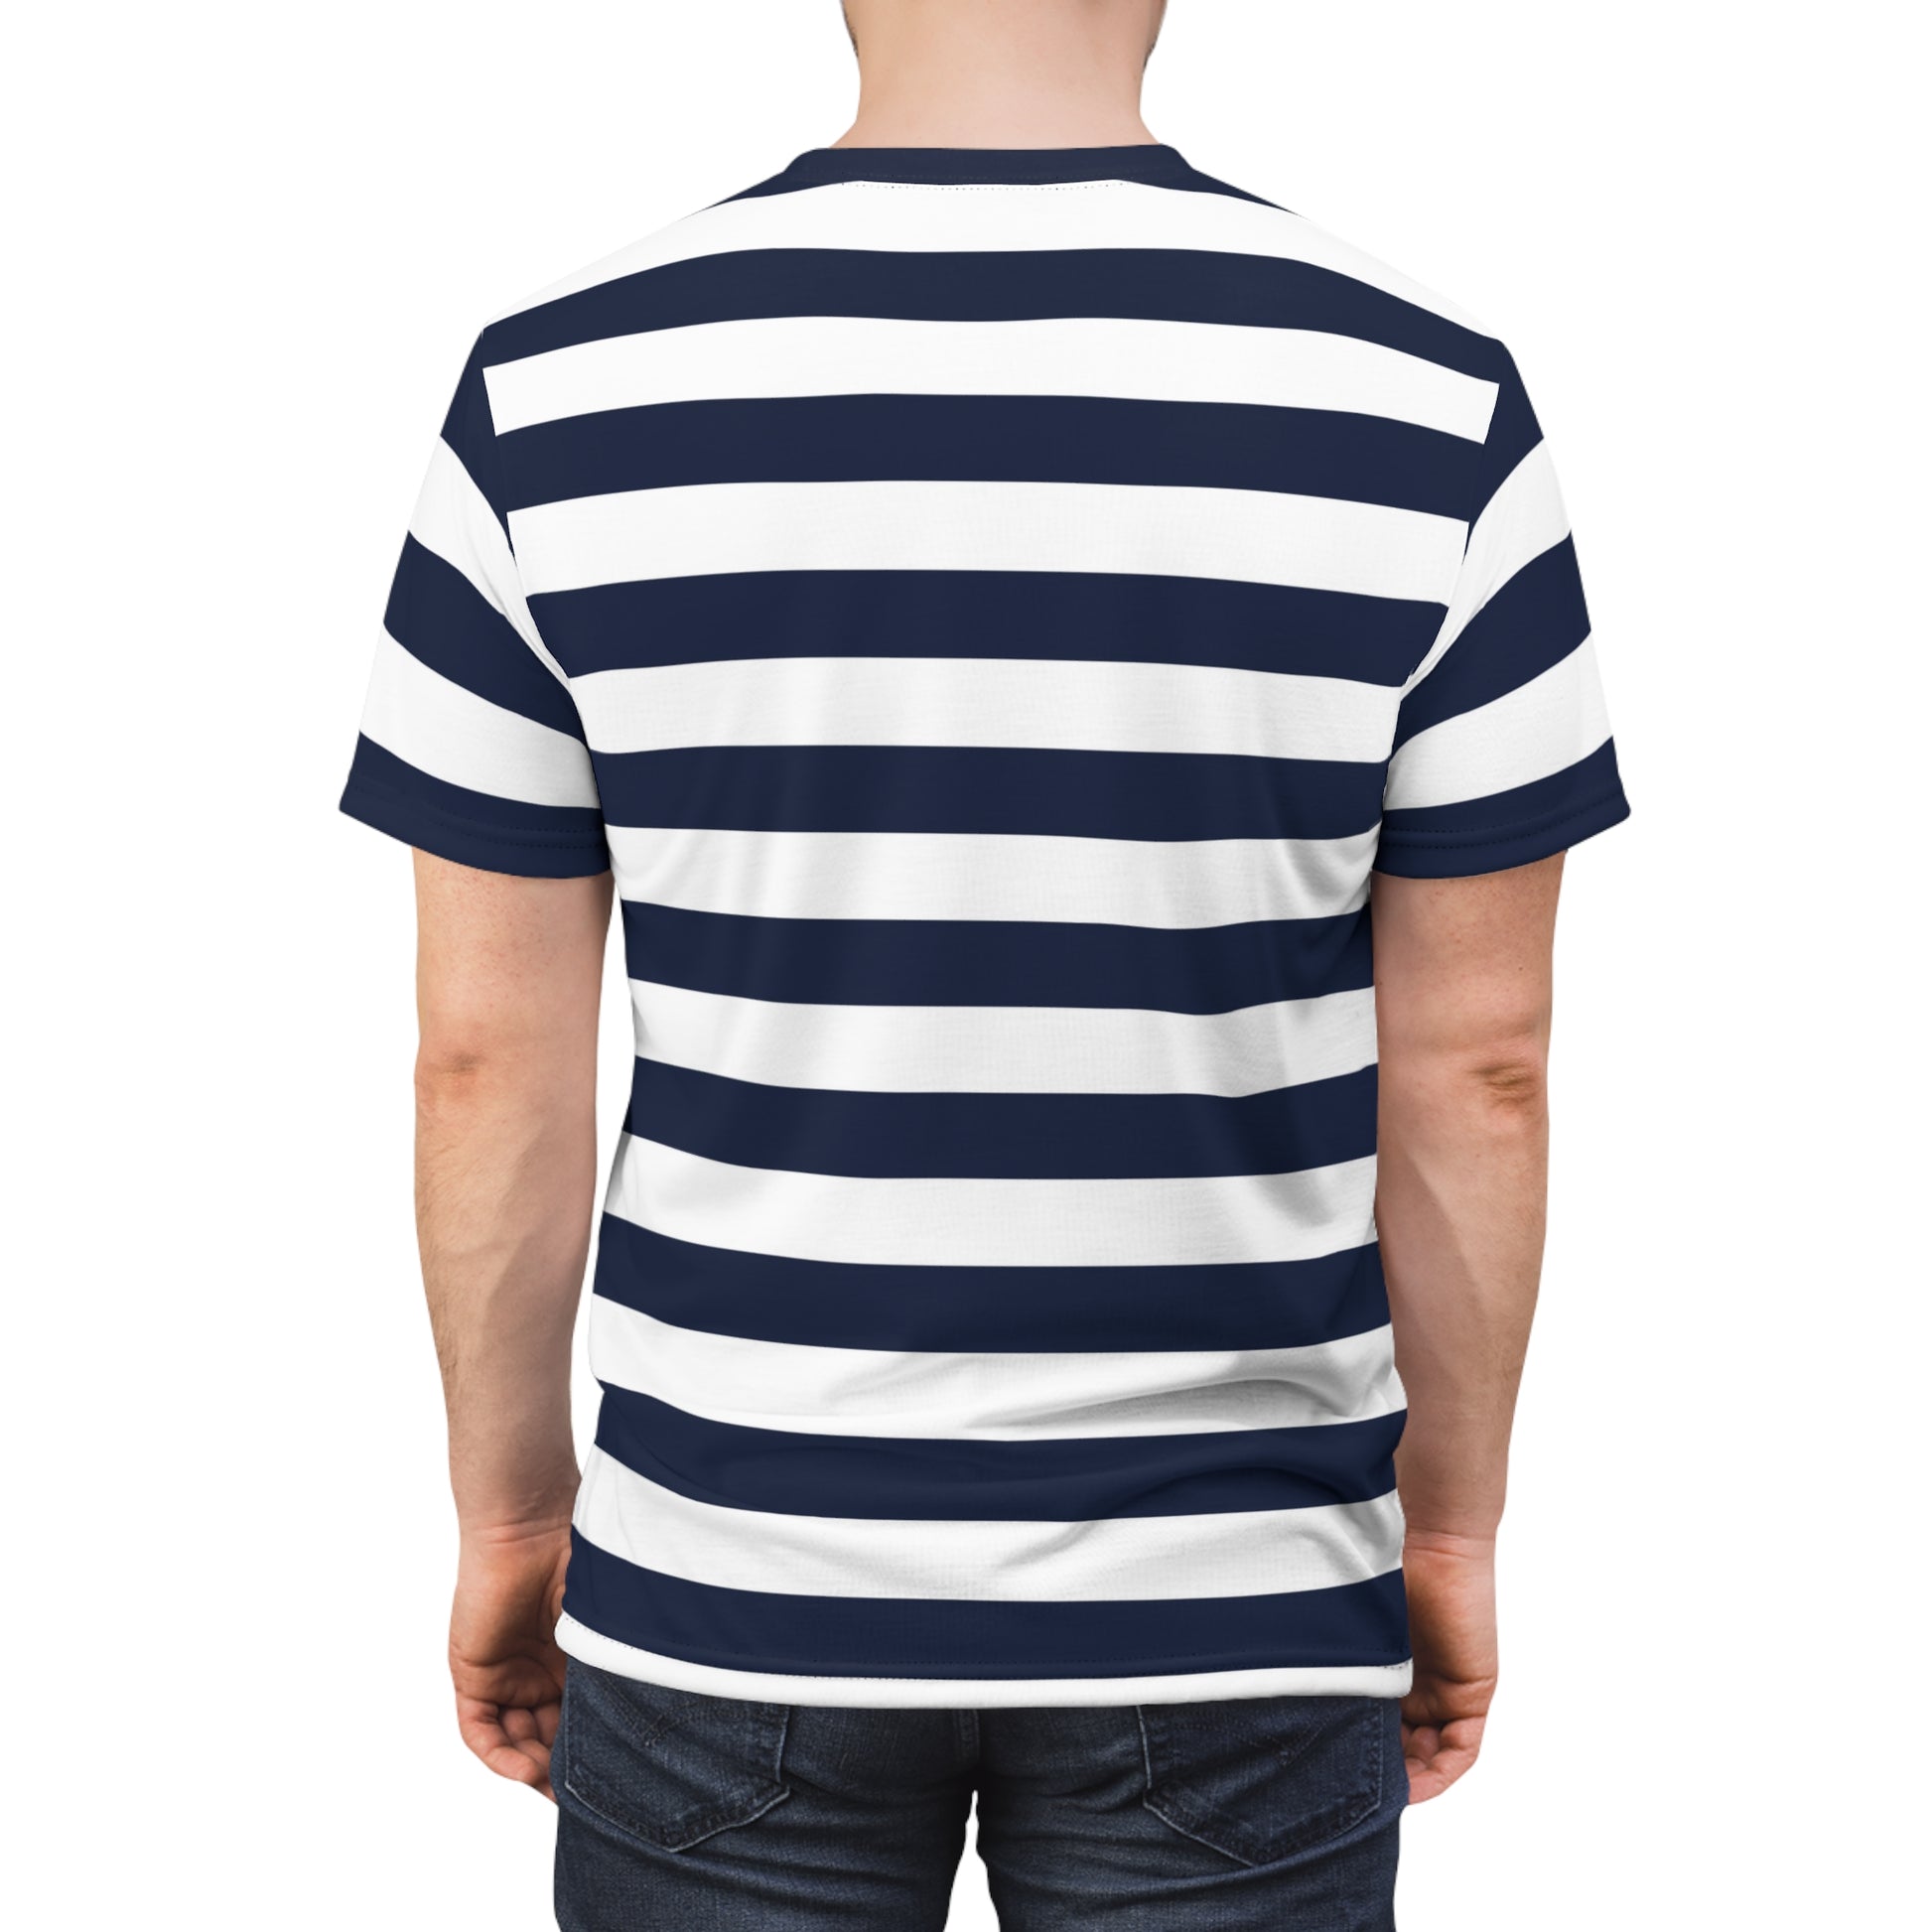 Blue and White Striped Tshirt, Navy Wide Horizontal Stripe Designer Aesthetic Crewneck Men Women Tee Top Short Sleeve Shirt Starcove Fashion